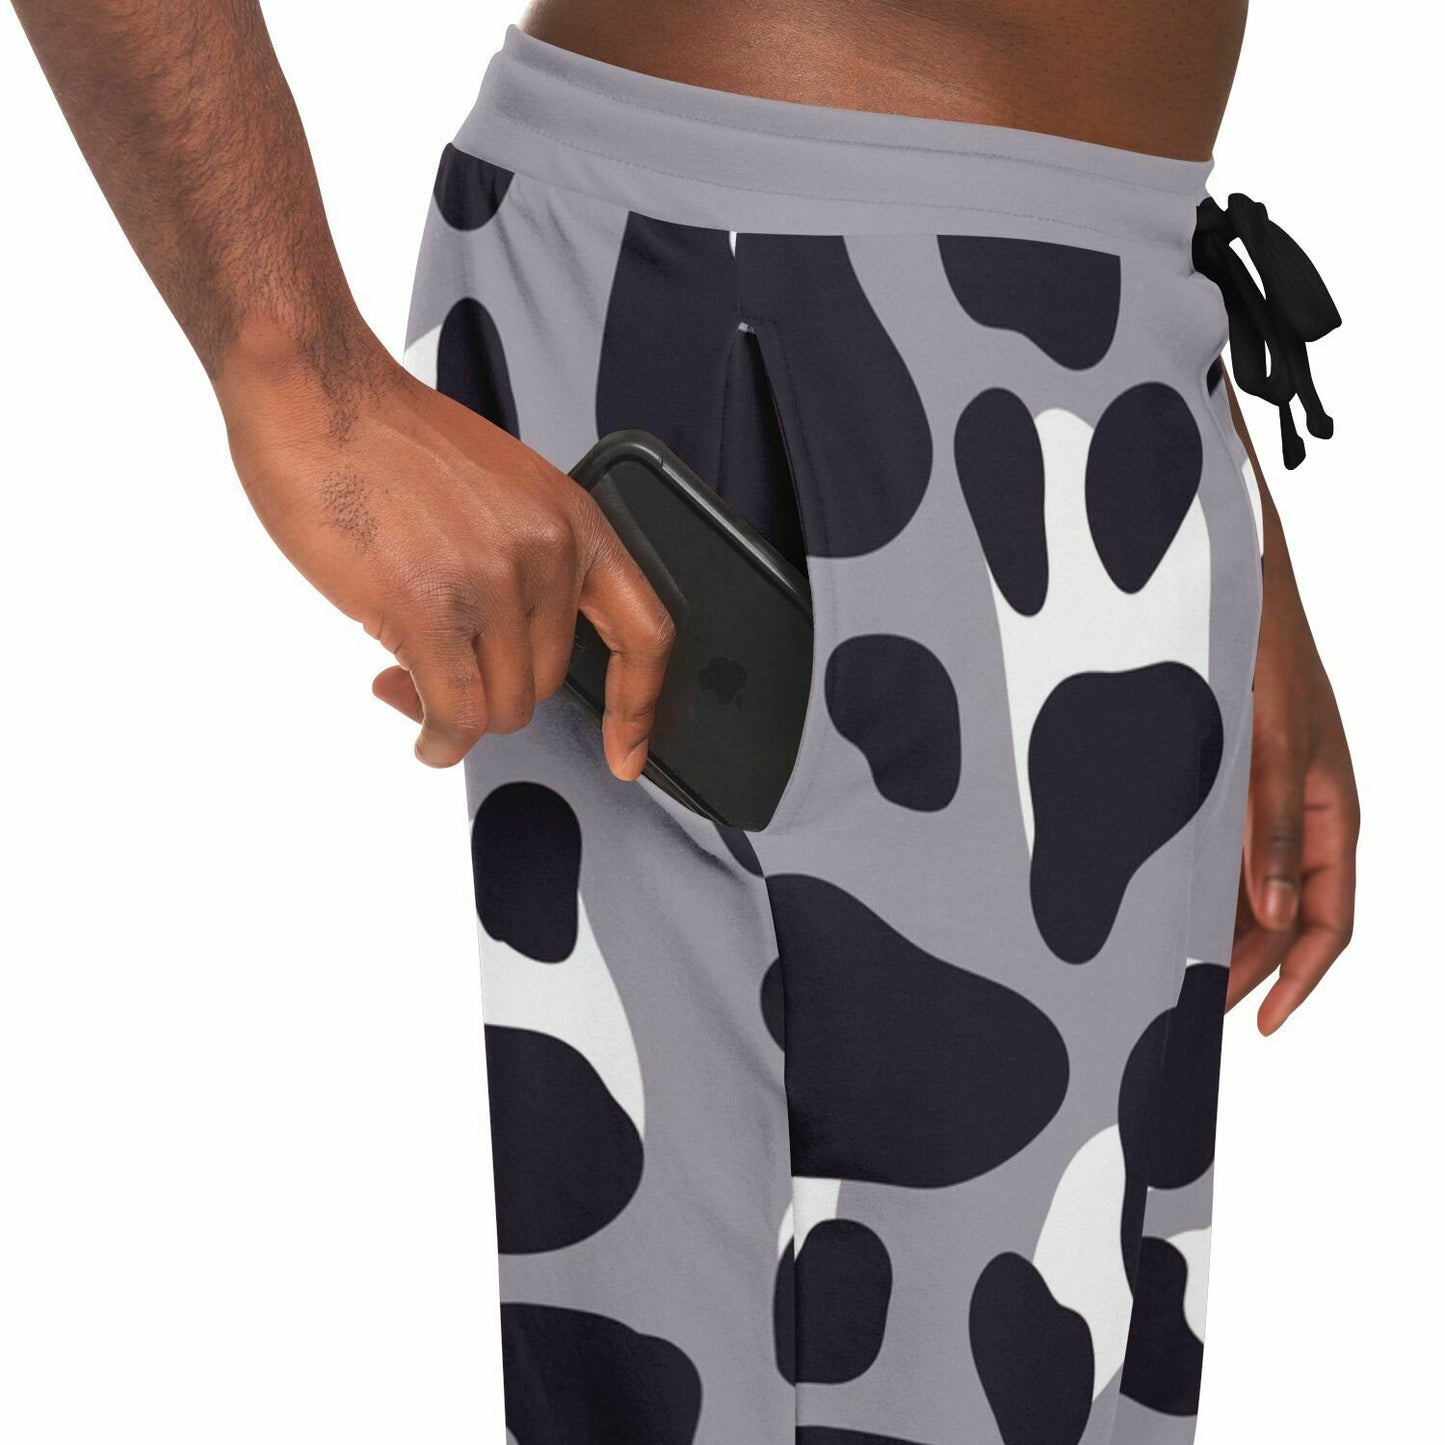 Pantalones de chándal de leopardo | Monocromo | Unisexo